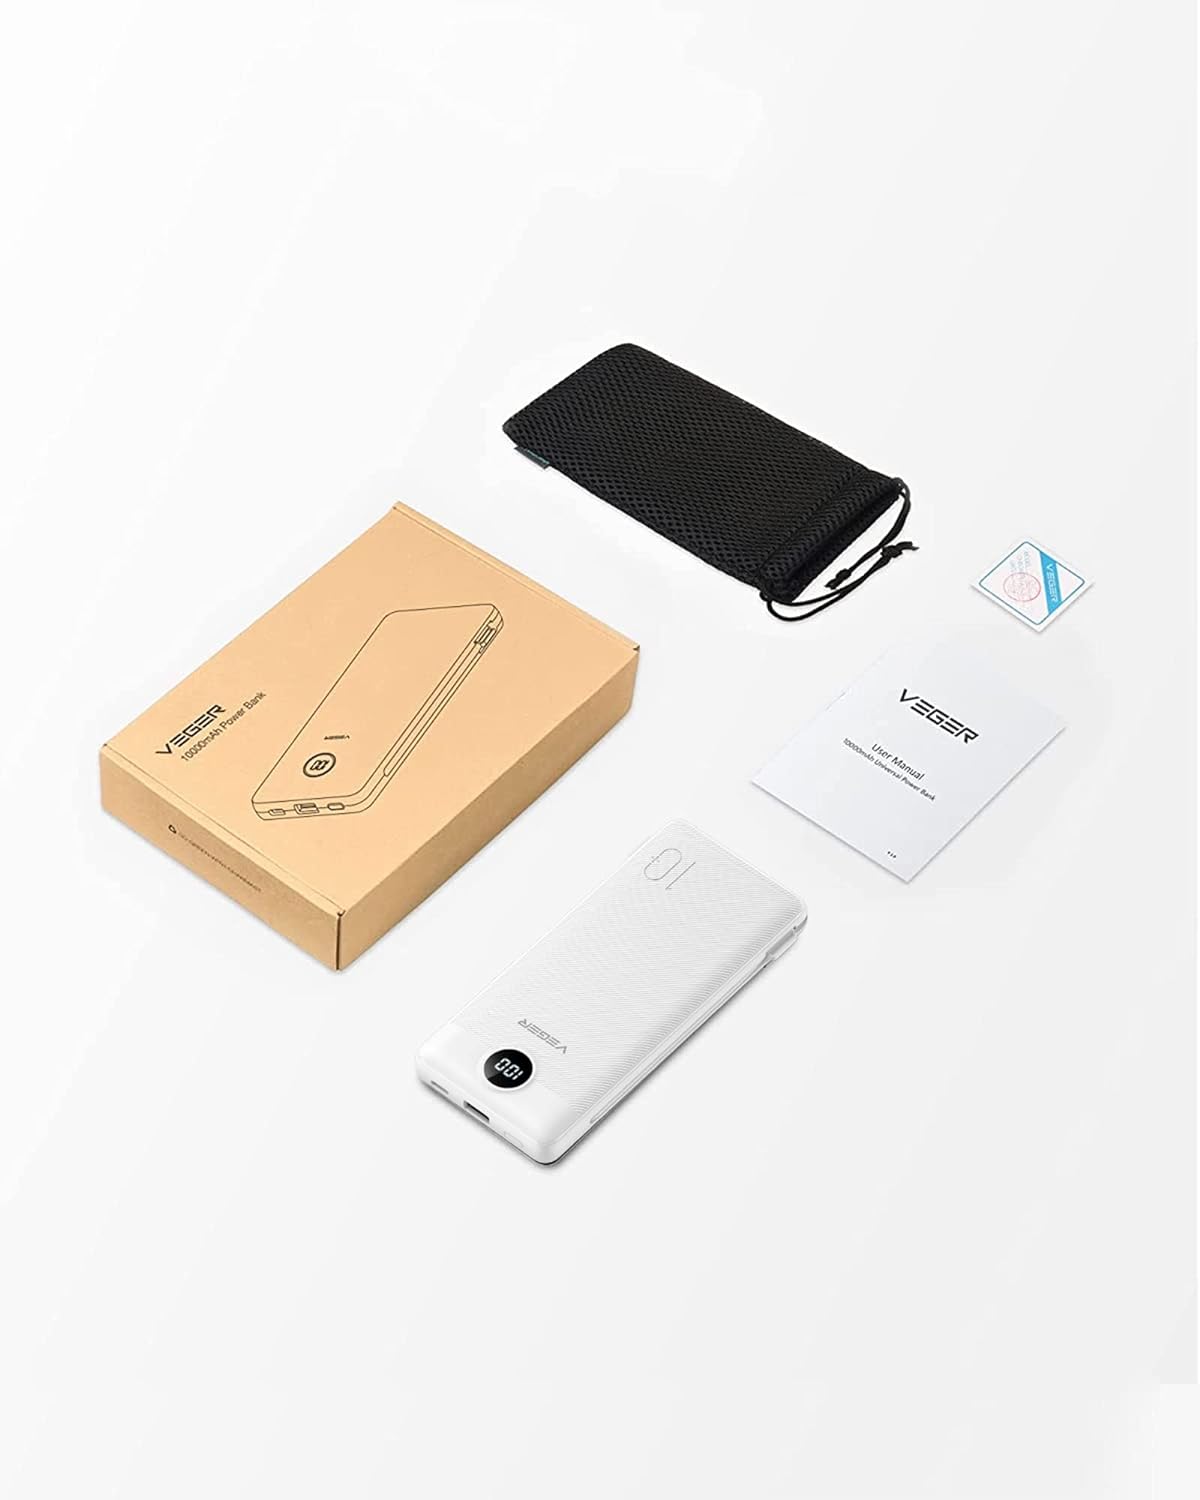 VEGER - Cargador portátil de iPhone, cables integrados, carga rápida USB C,  batería externa delgada de 10,000 mAh, enchufe de pared y USB para iPhone